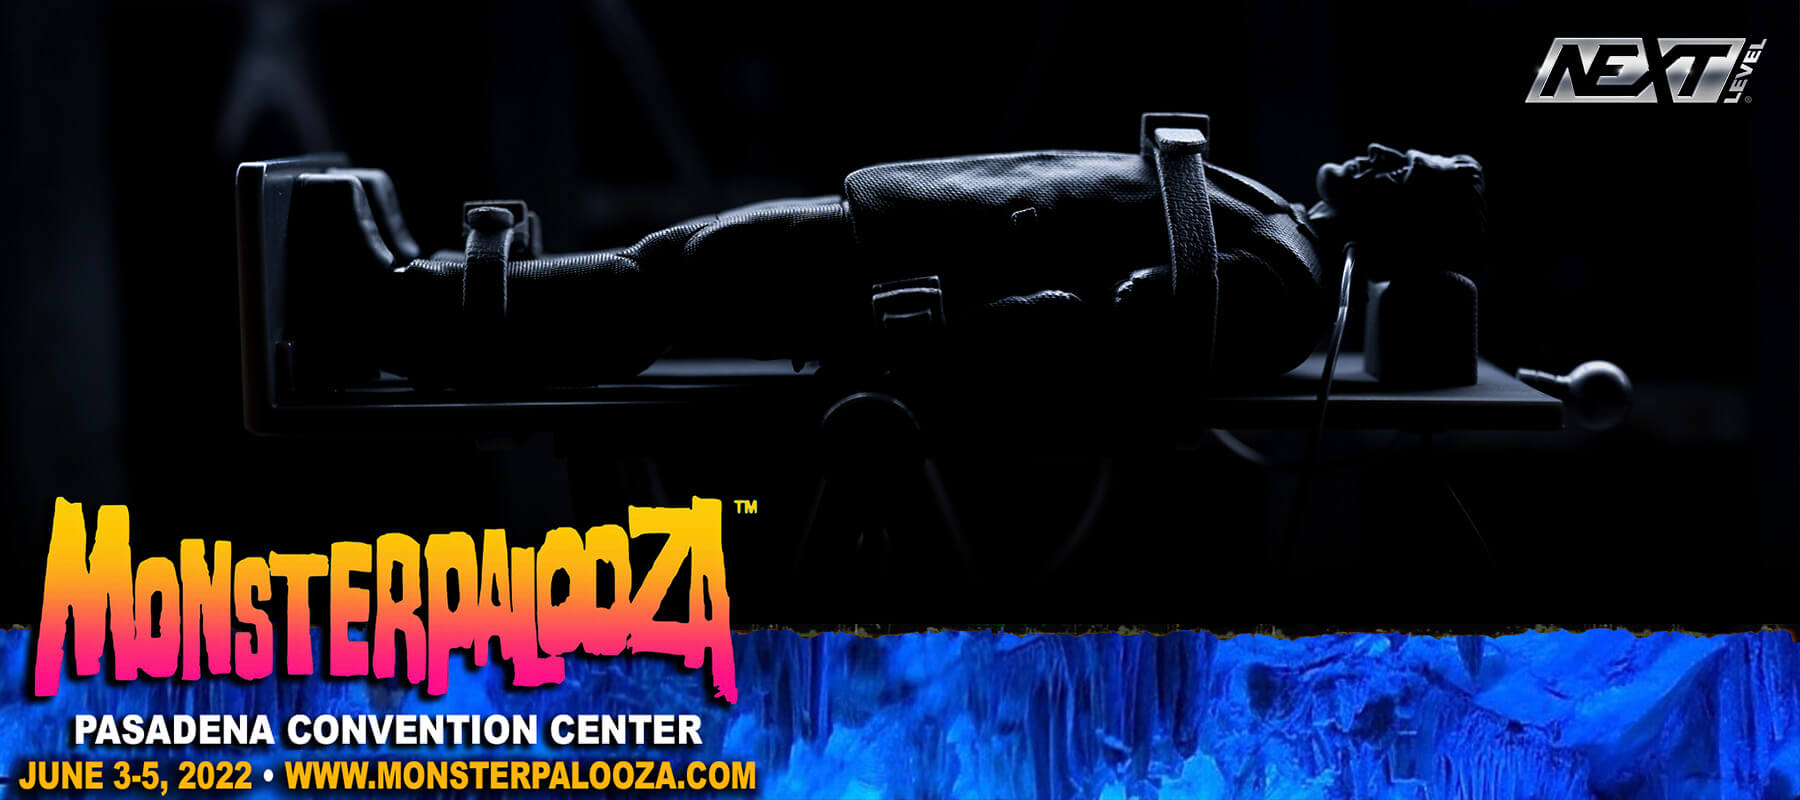 Monsterpalooza 2022 is upon us!